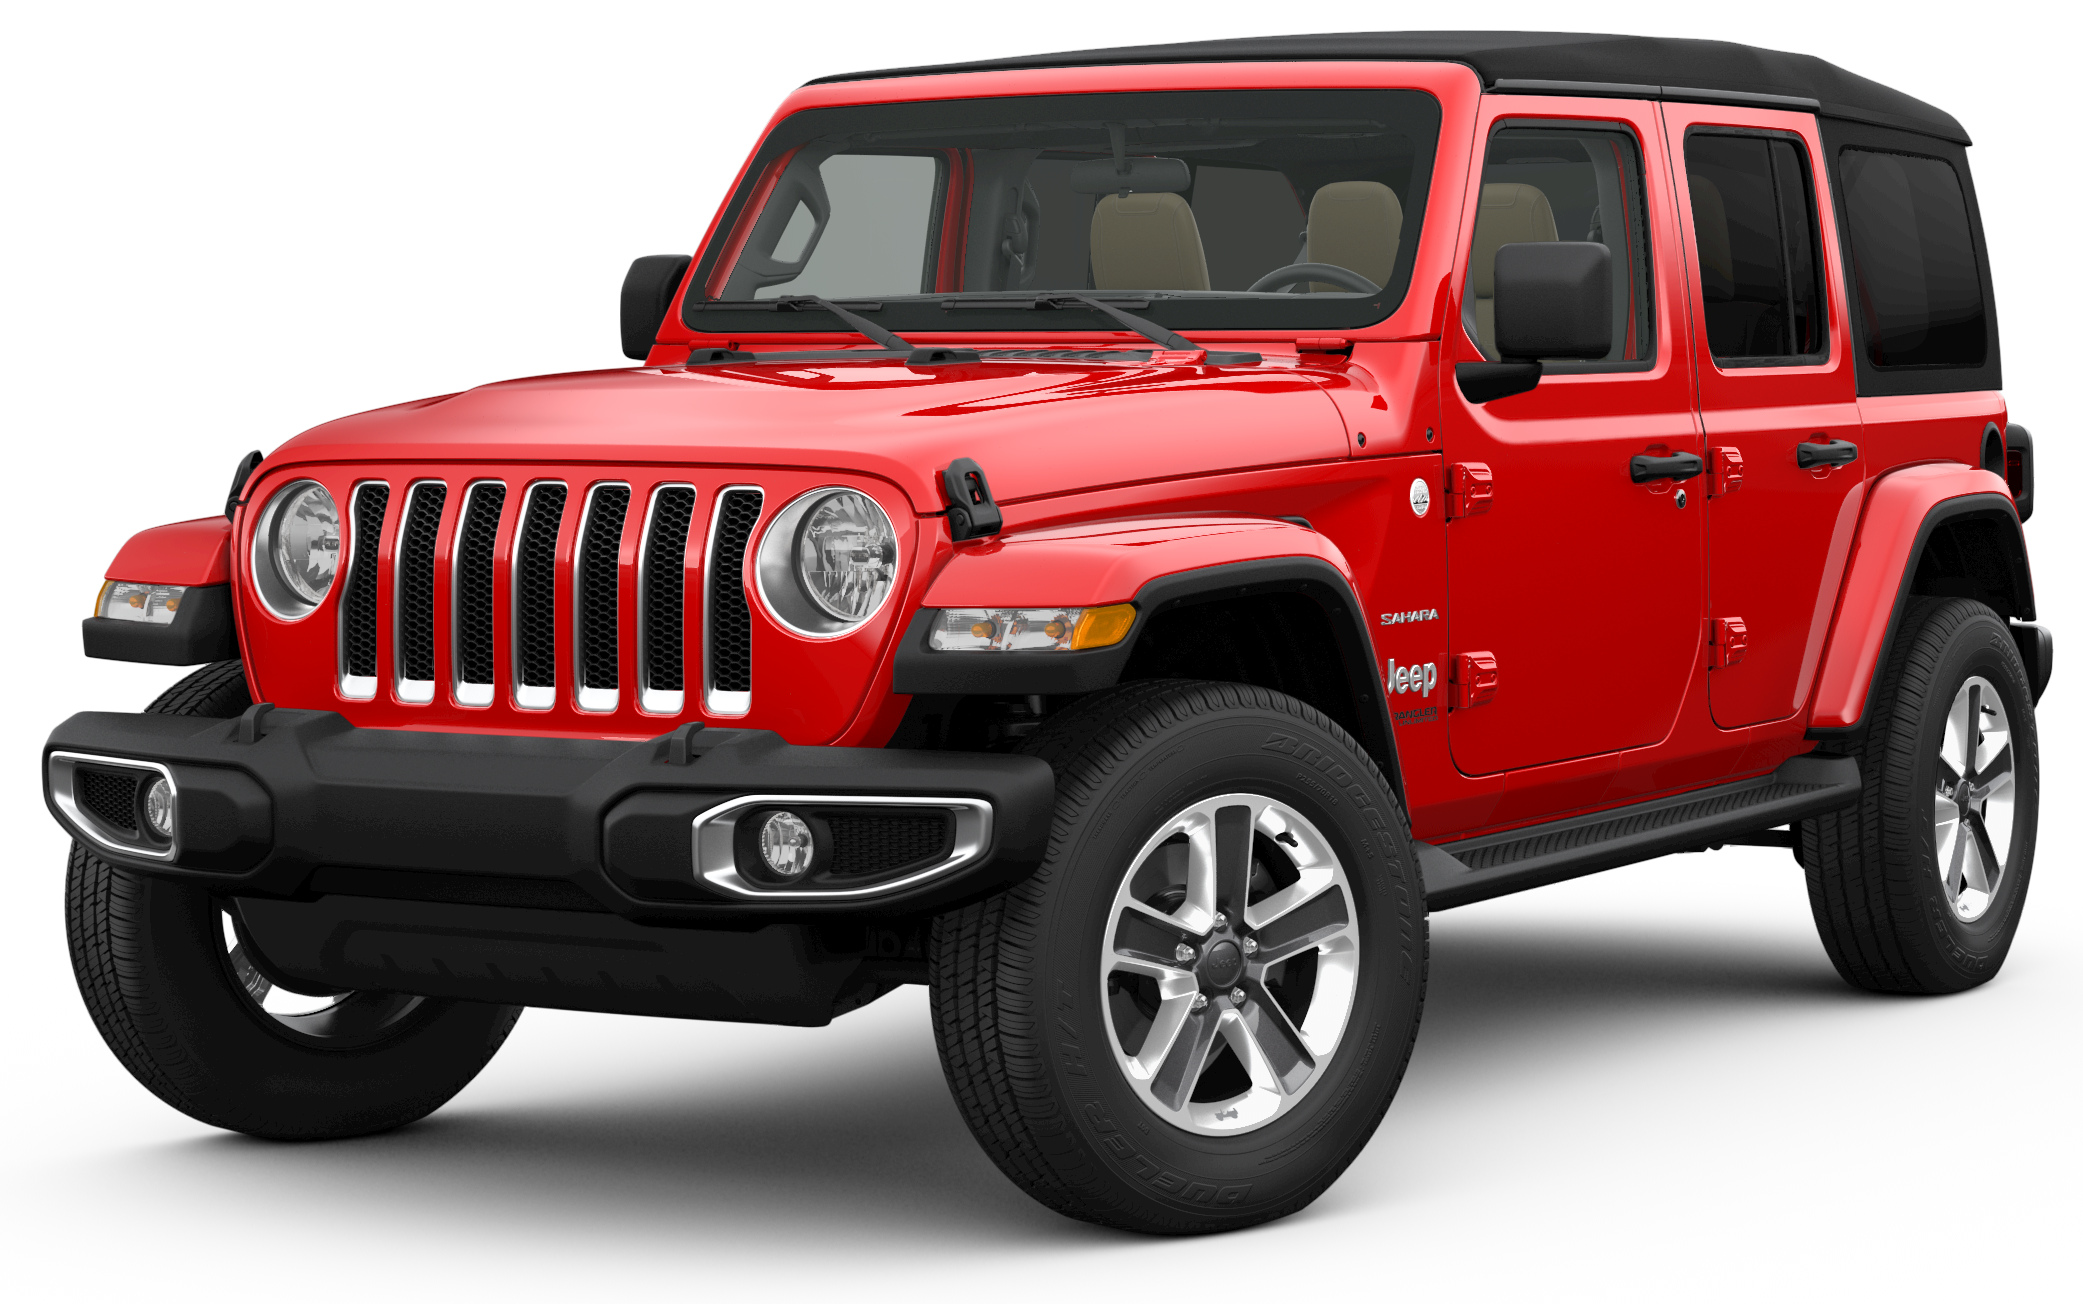 jeep-wrangler-rebates